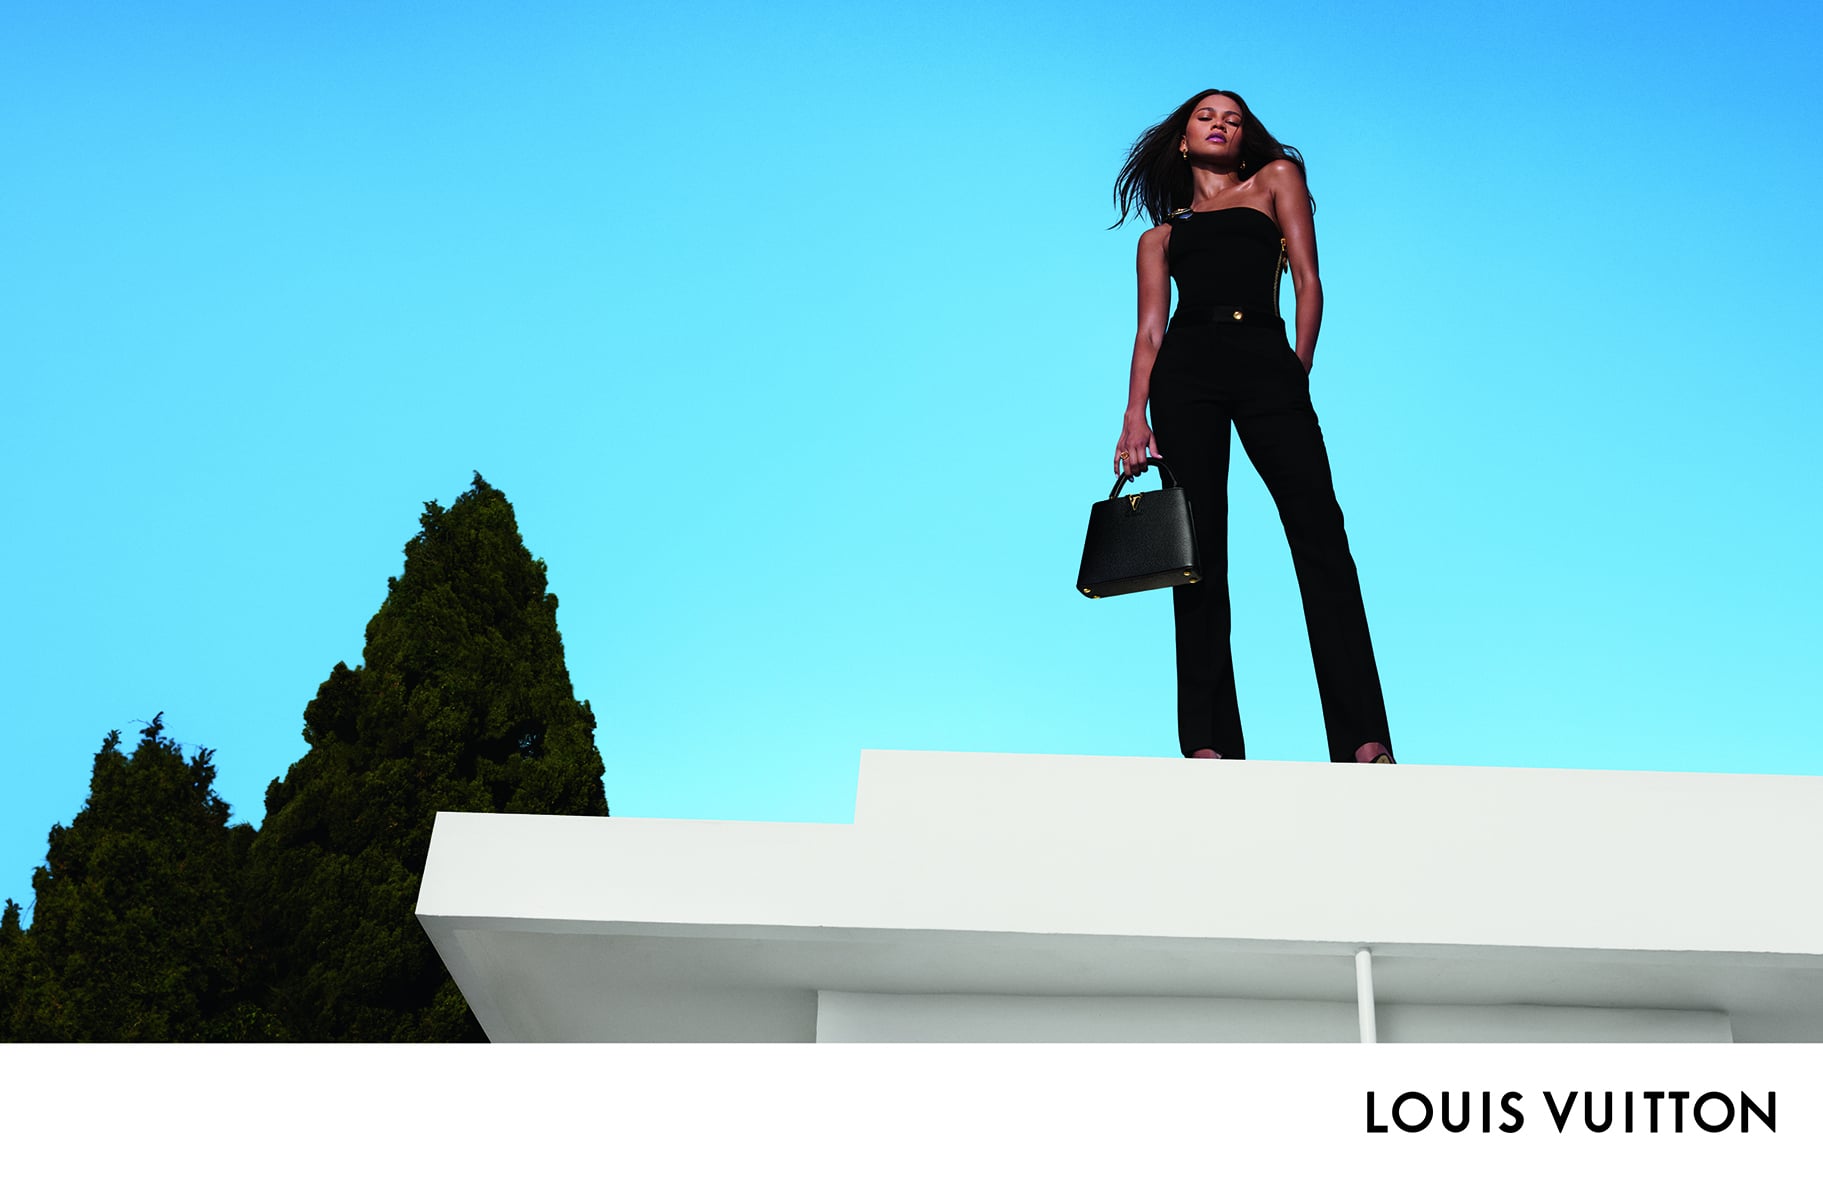 Louis Vuitton names Zendaya as new house ambassador